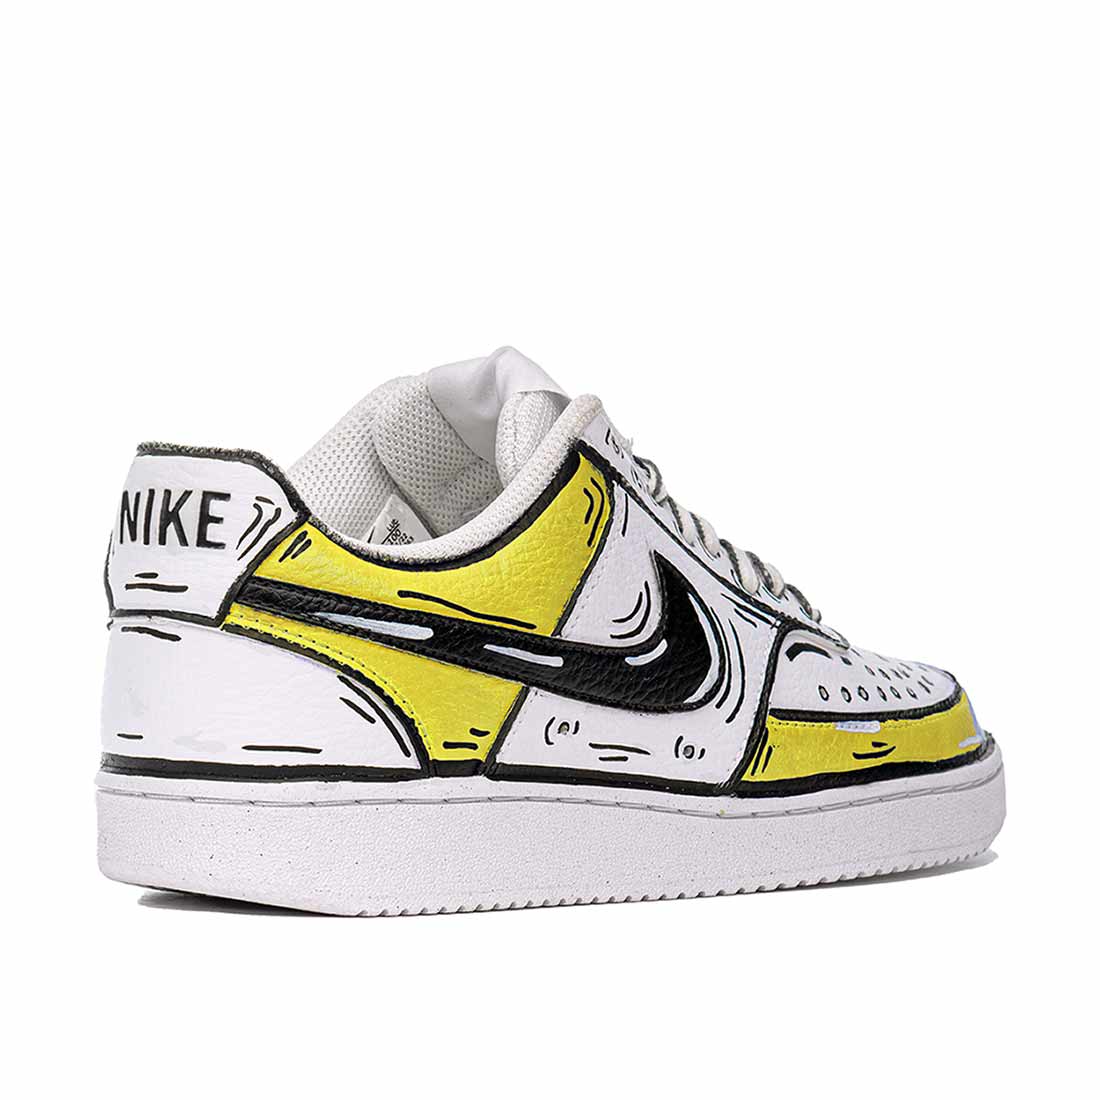 Nike gialle e bianche con effetto cartoon